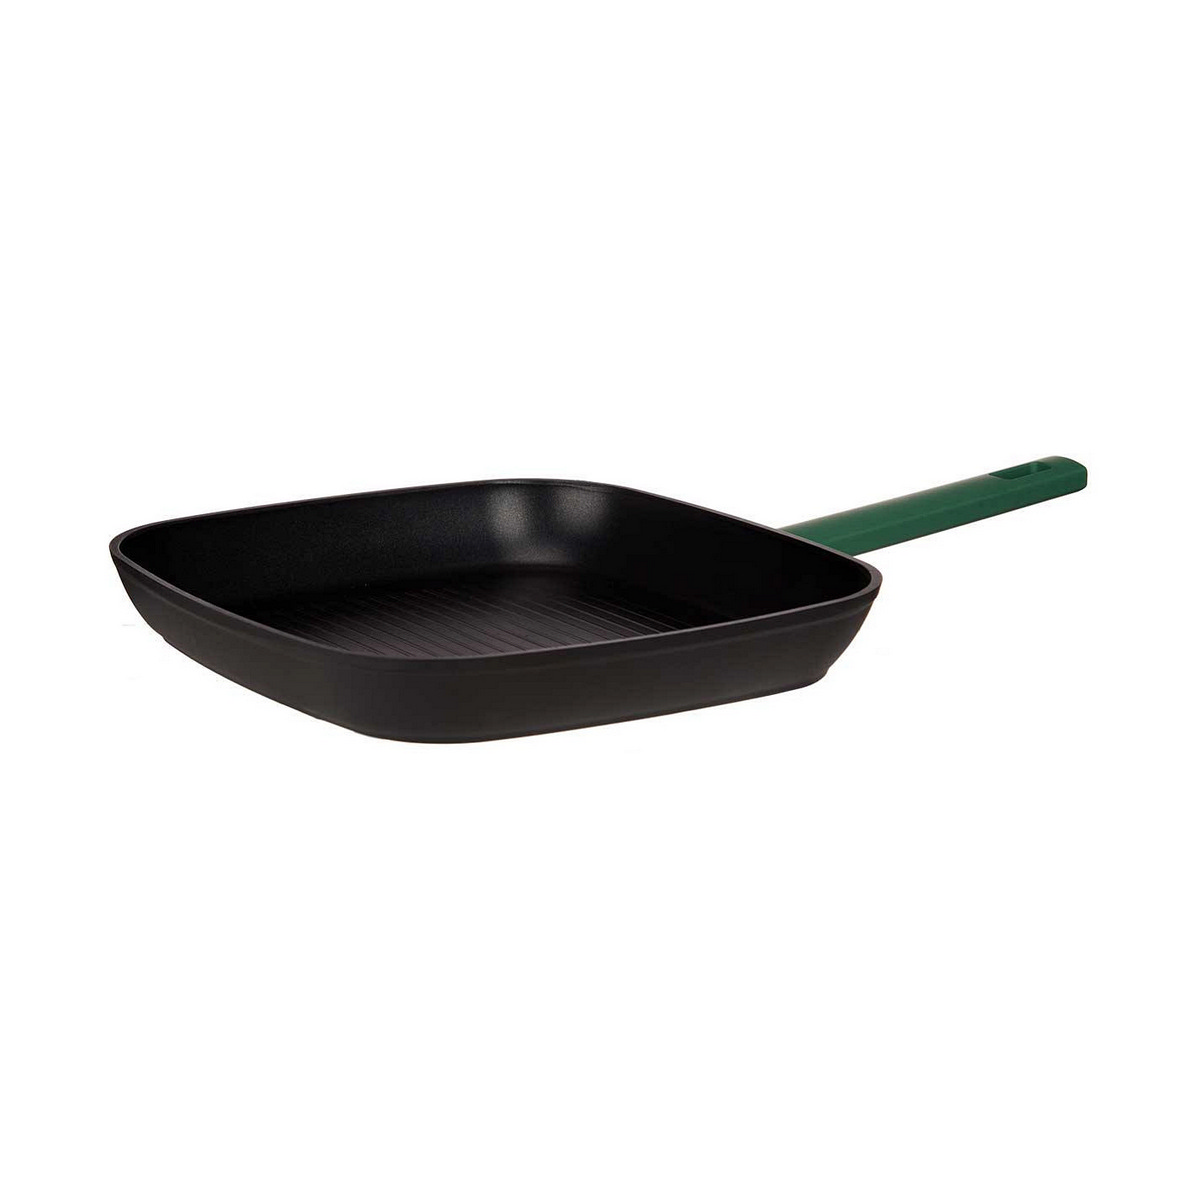 Grill pan with stripes Black Green 28 x 28 cm Aluminium